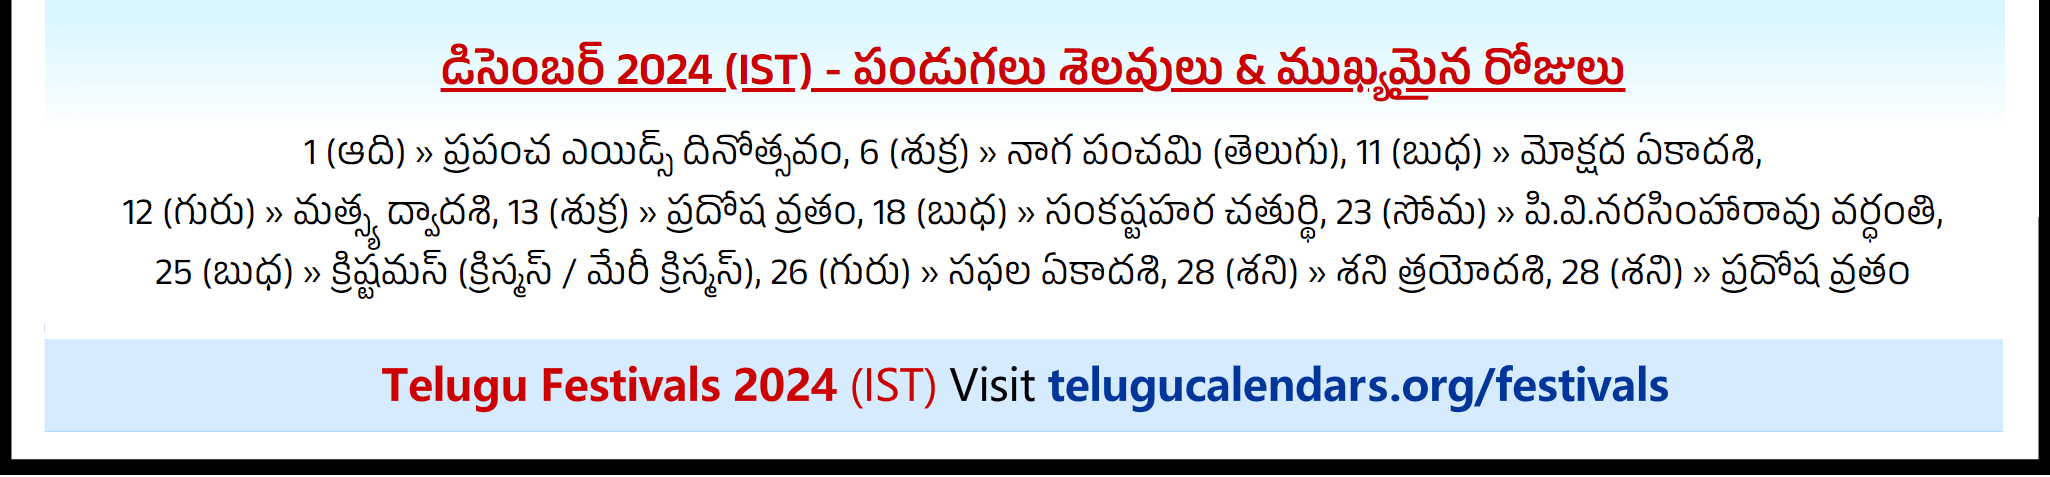 Telugu Festivals 2024 December Phoenix